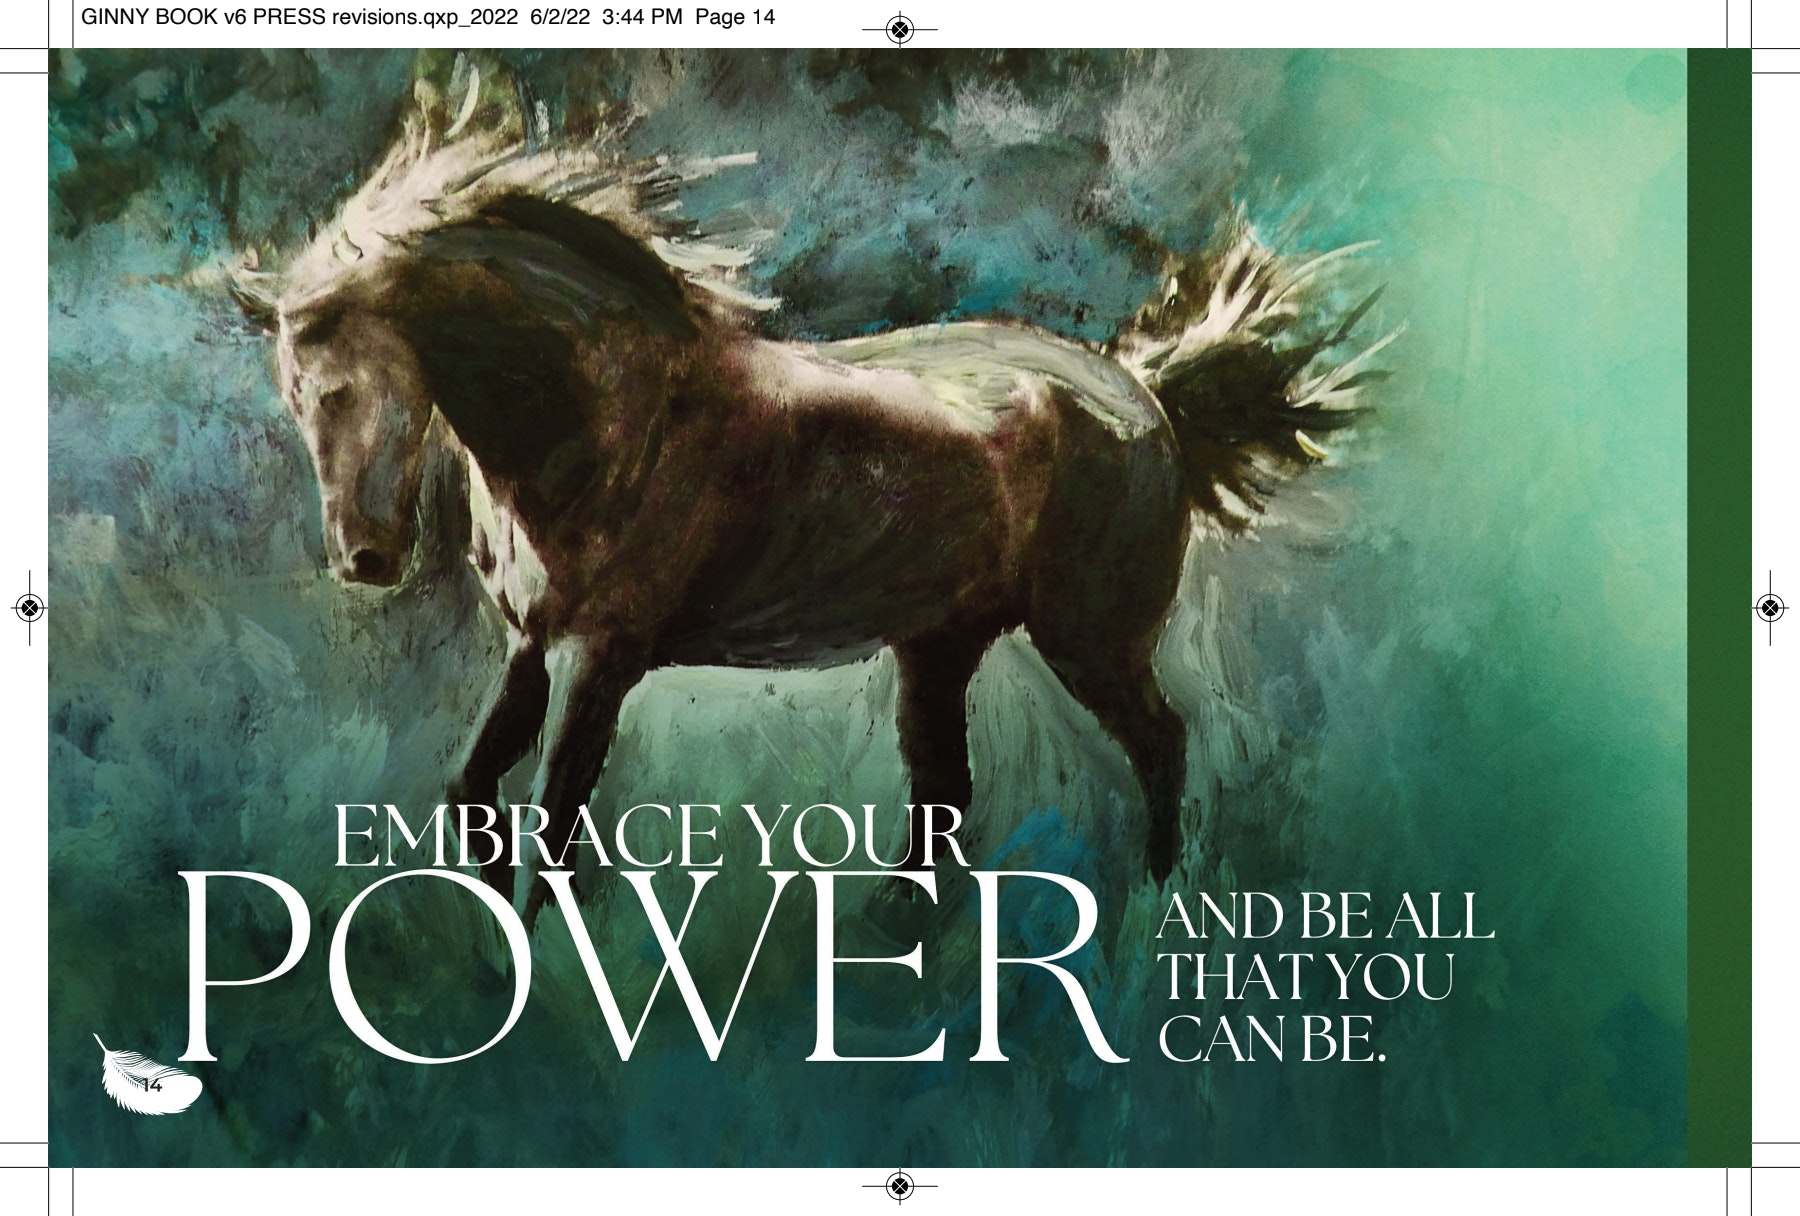 Ginny Book Horse power